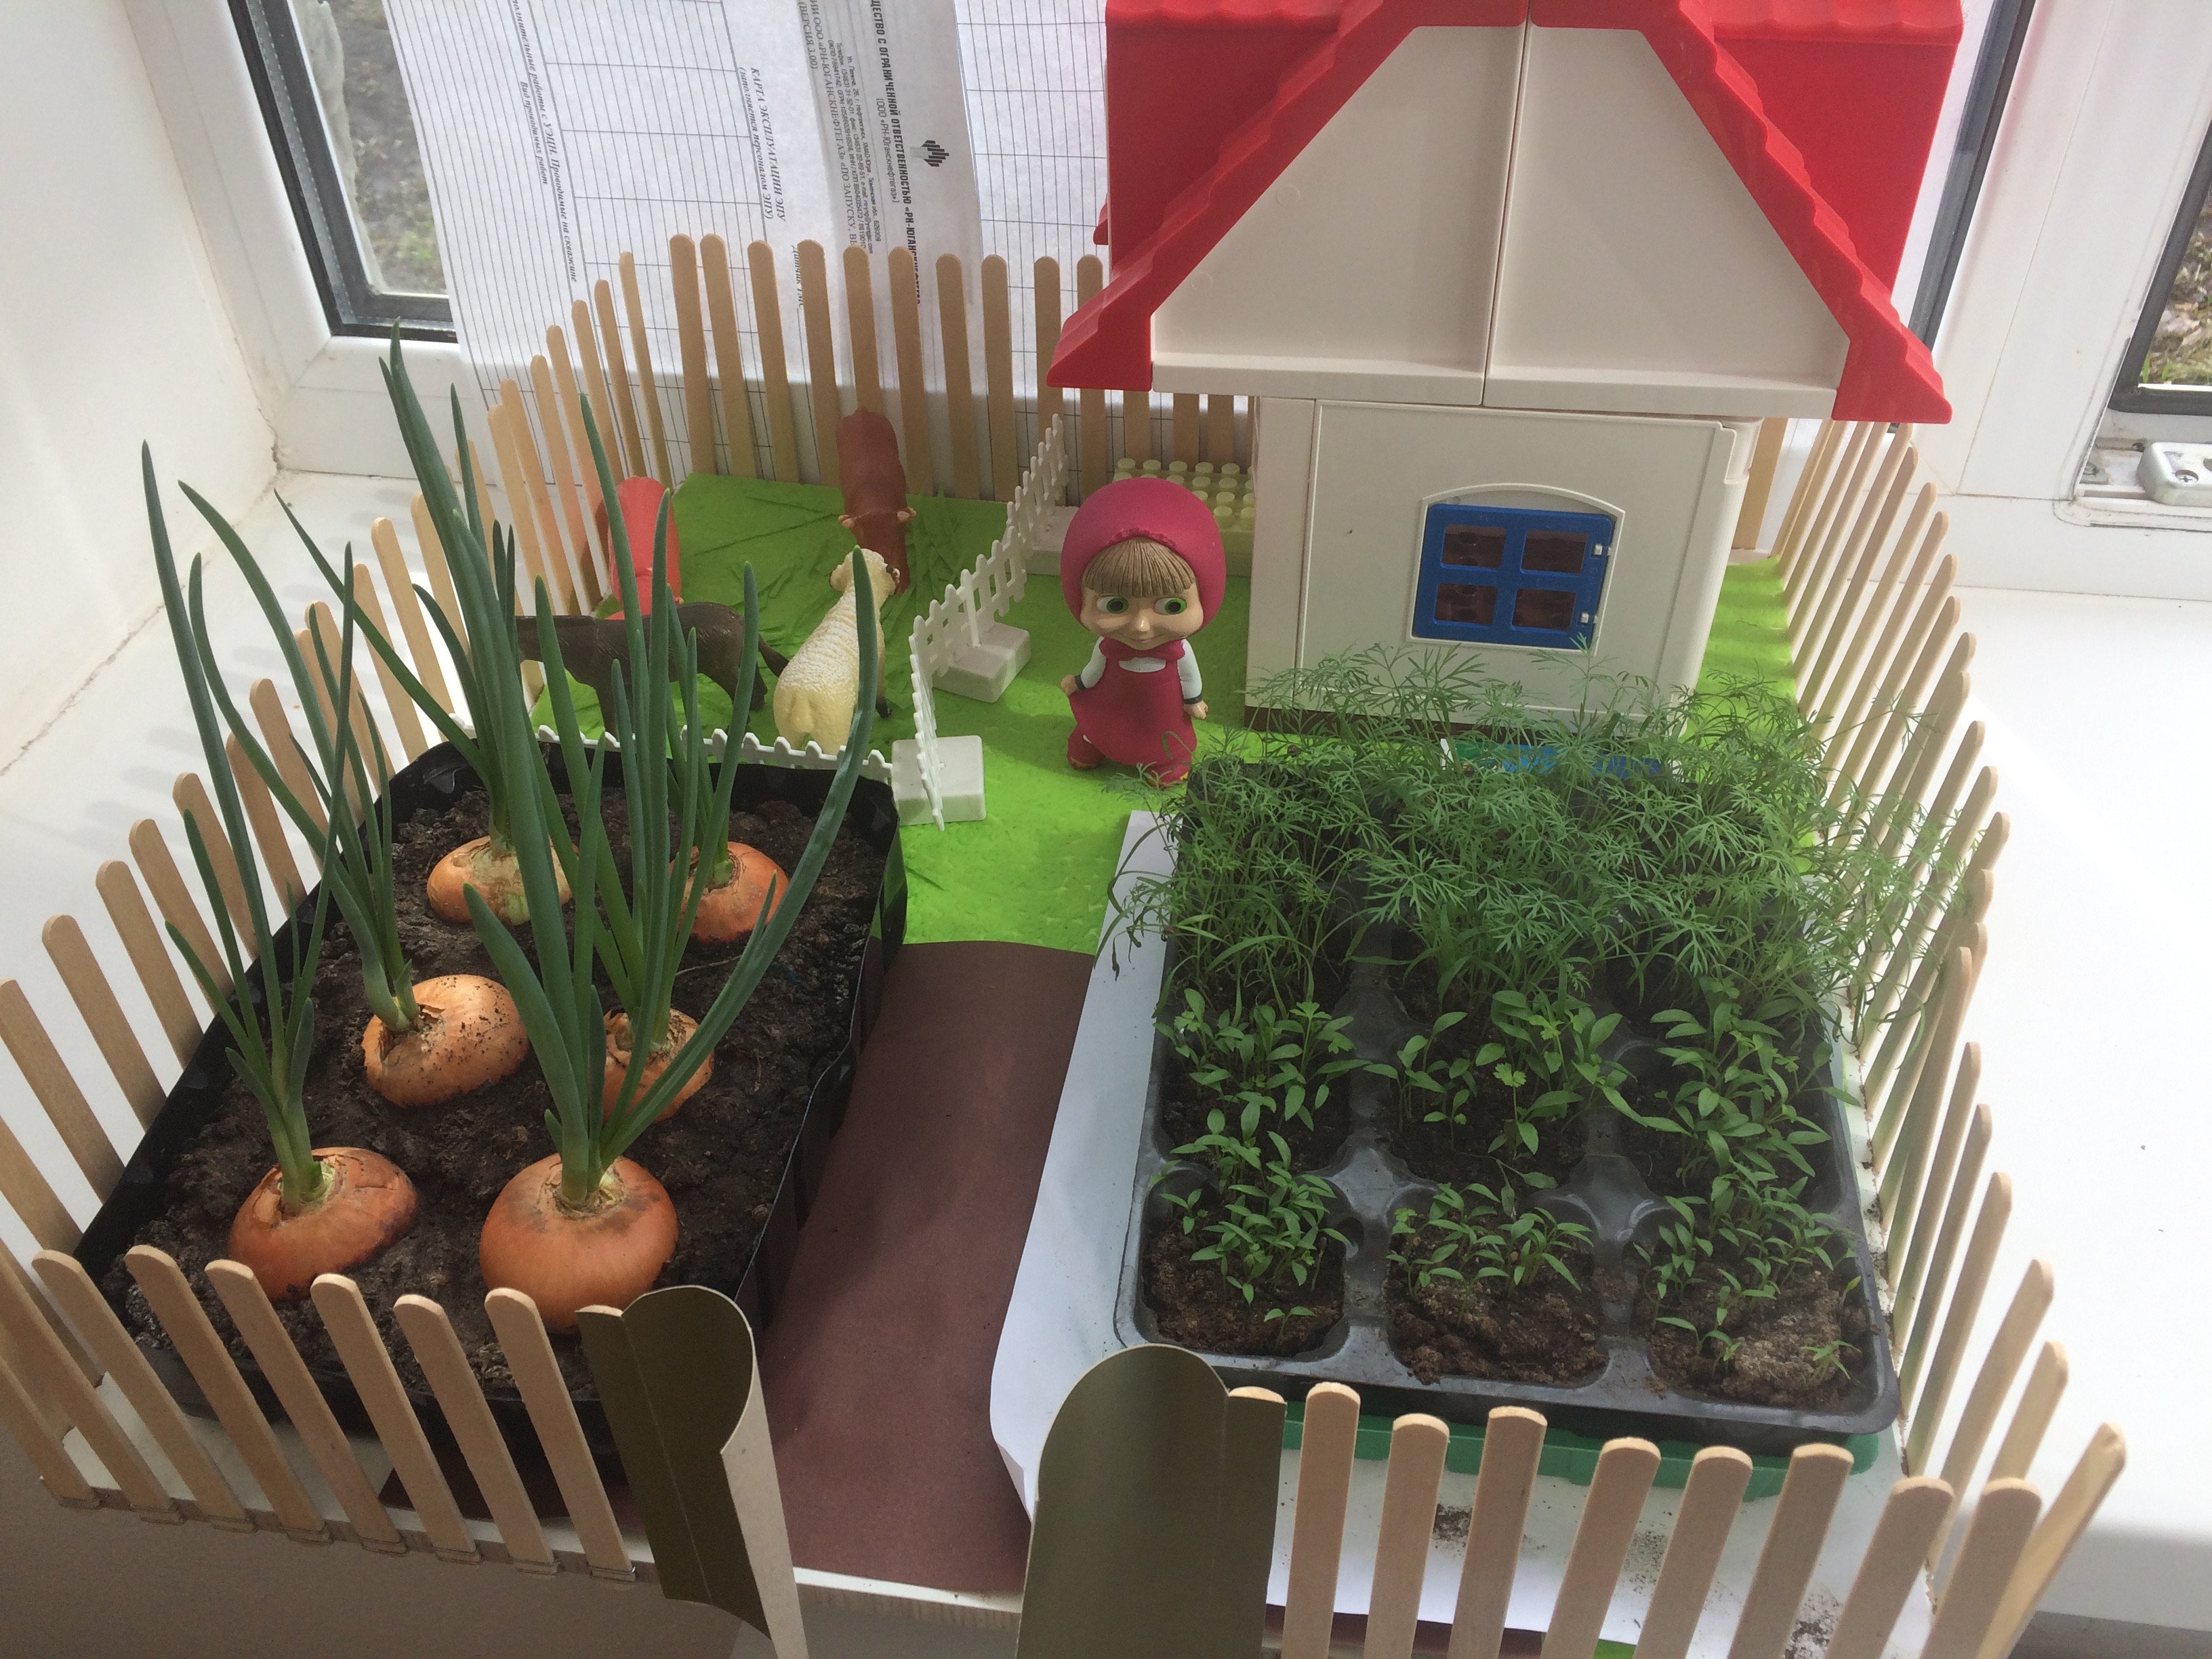 Огород на окне лук в детском саду. Огород на окне. Огород на подоконнике. Огород на окне в детском саду. Огород на окошке в детском саду.